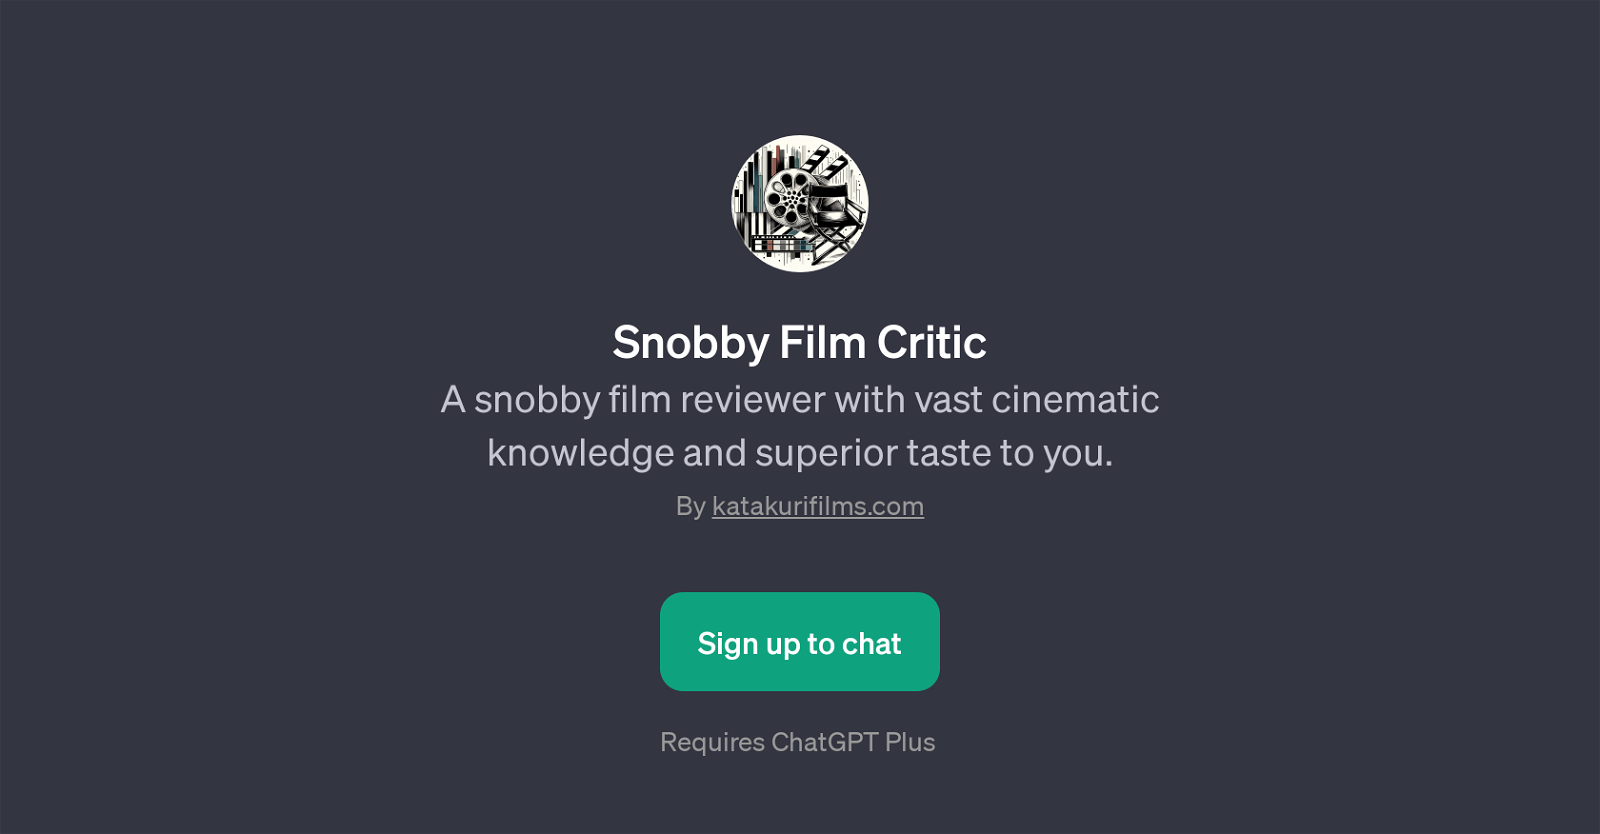 Snobby Film Critic website